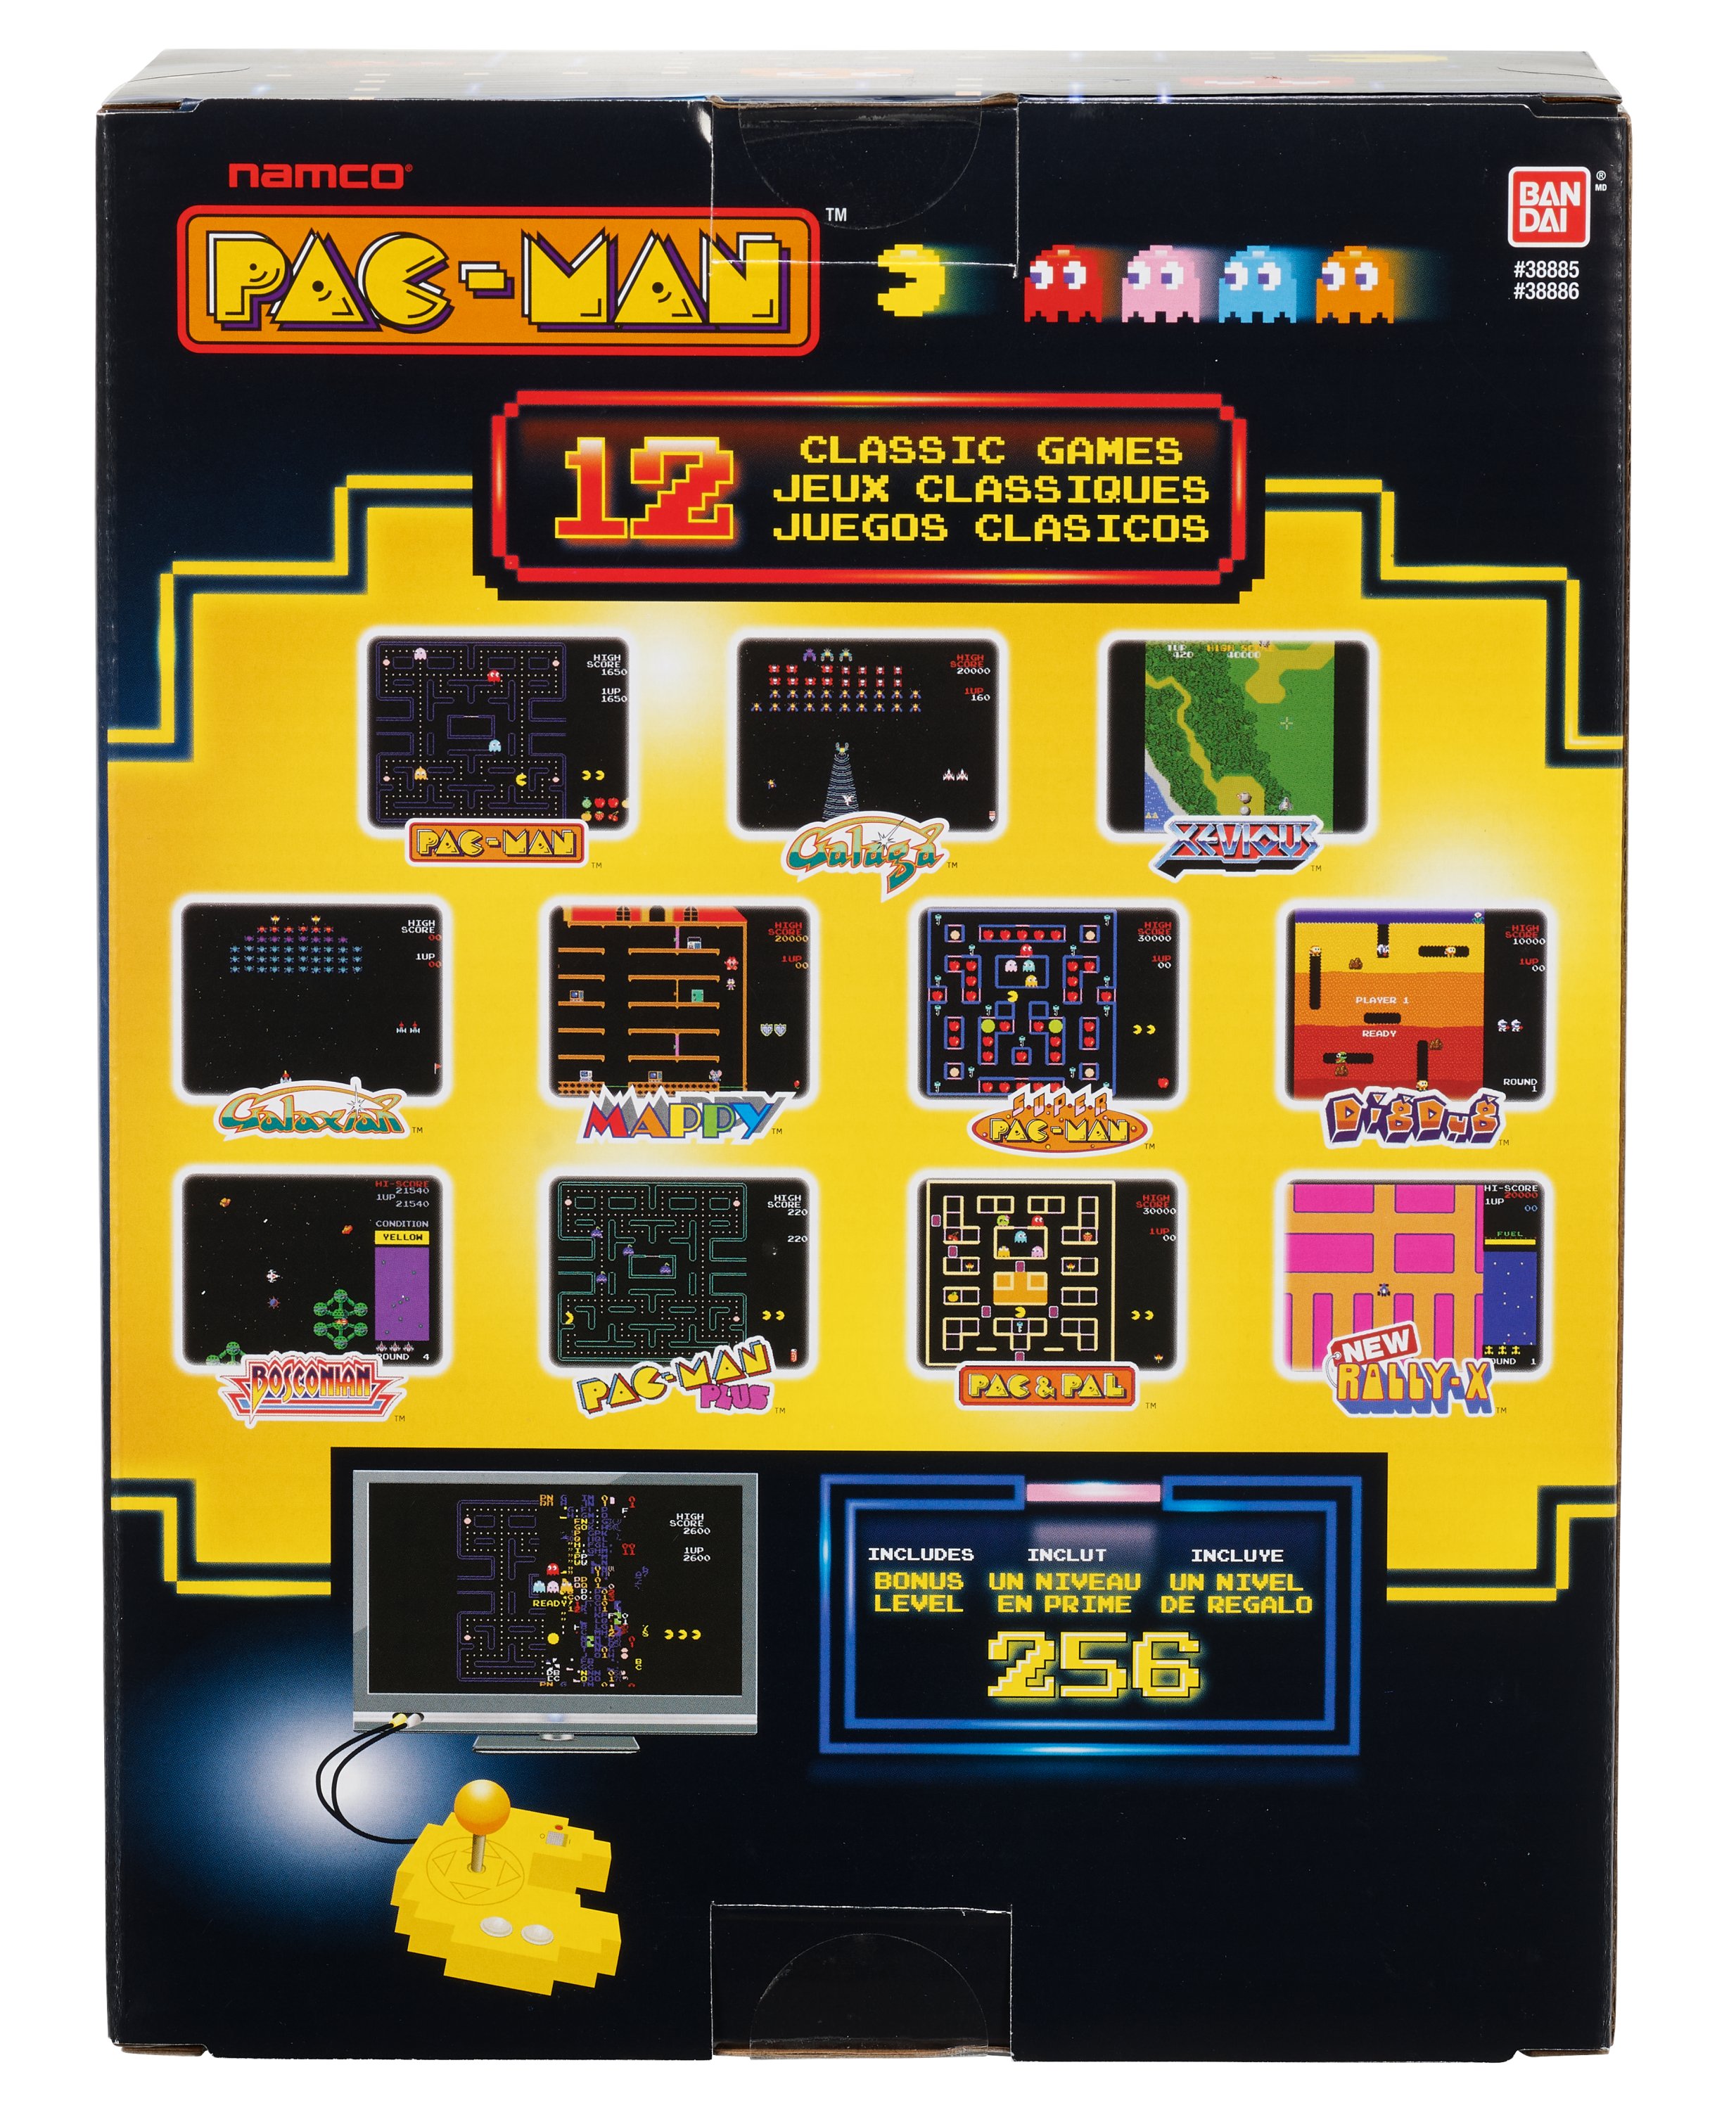 Pac-man play Original Pacman